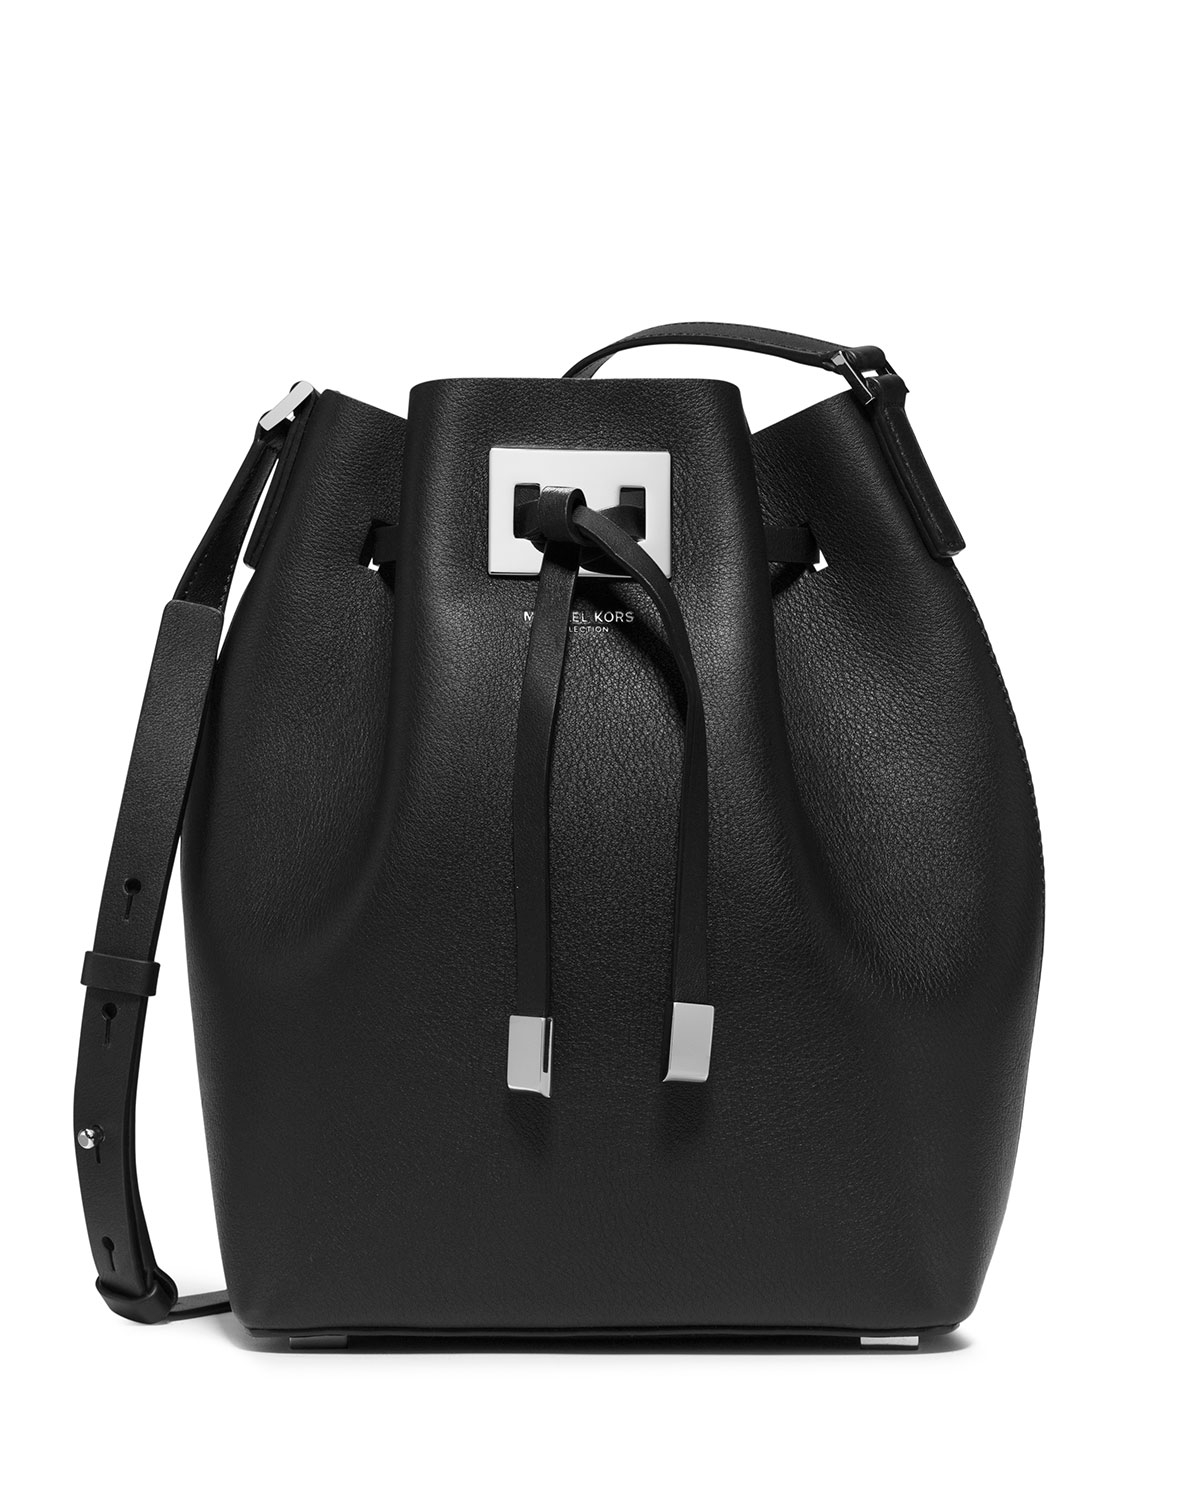 Lyst - Michael Kors Miranda Medium Drawstring Bucket Bag in Black